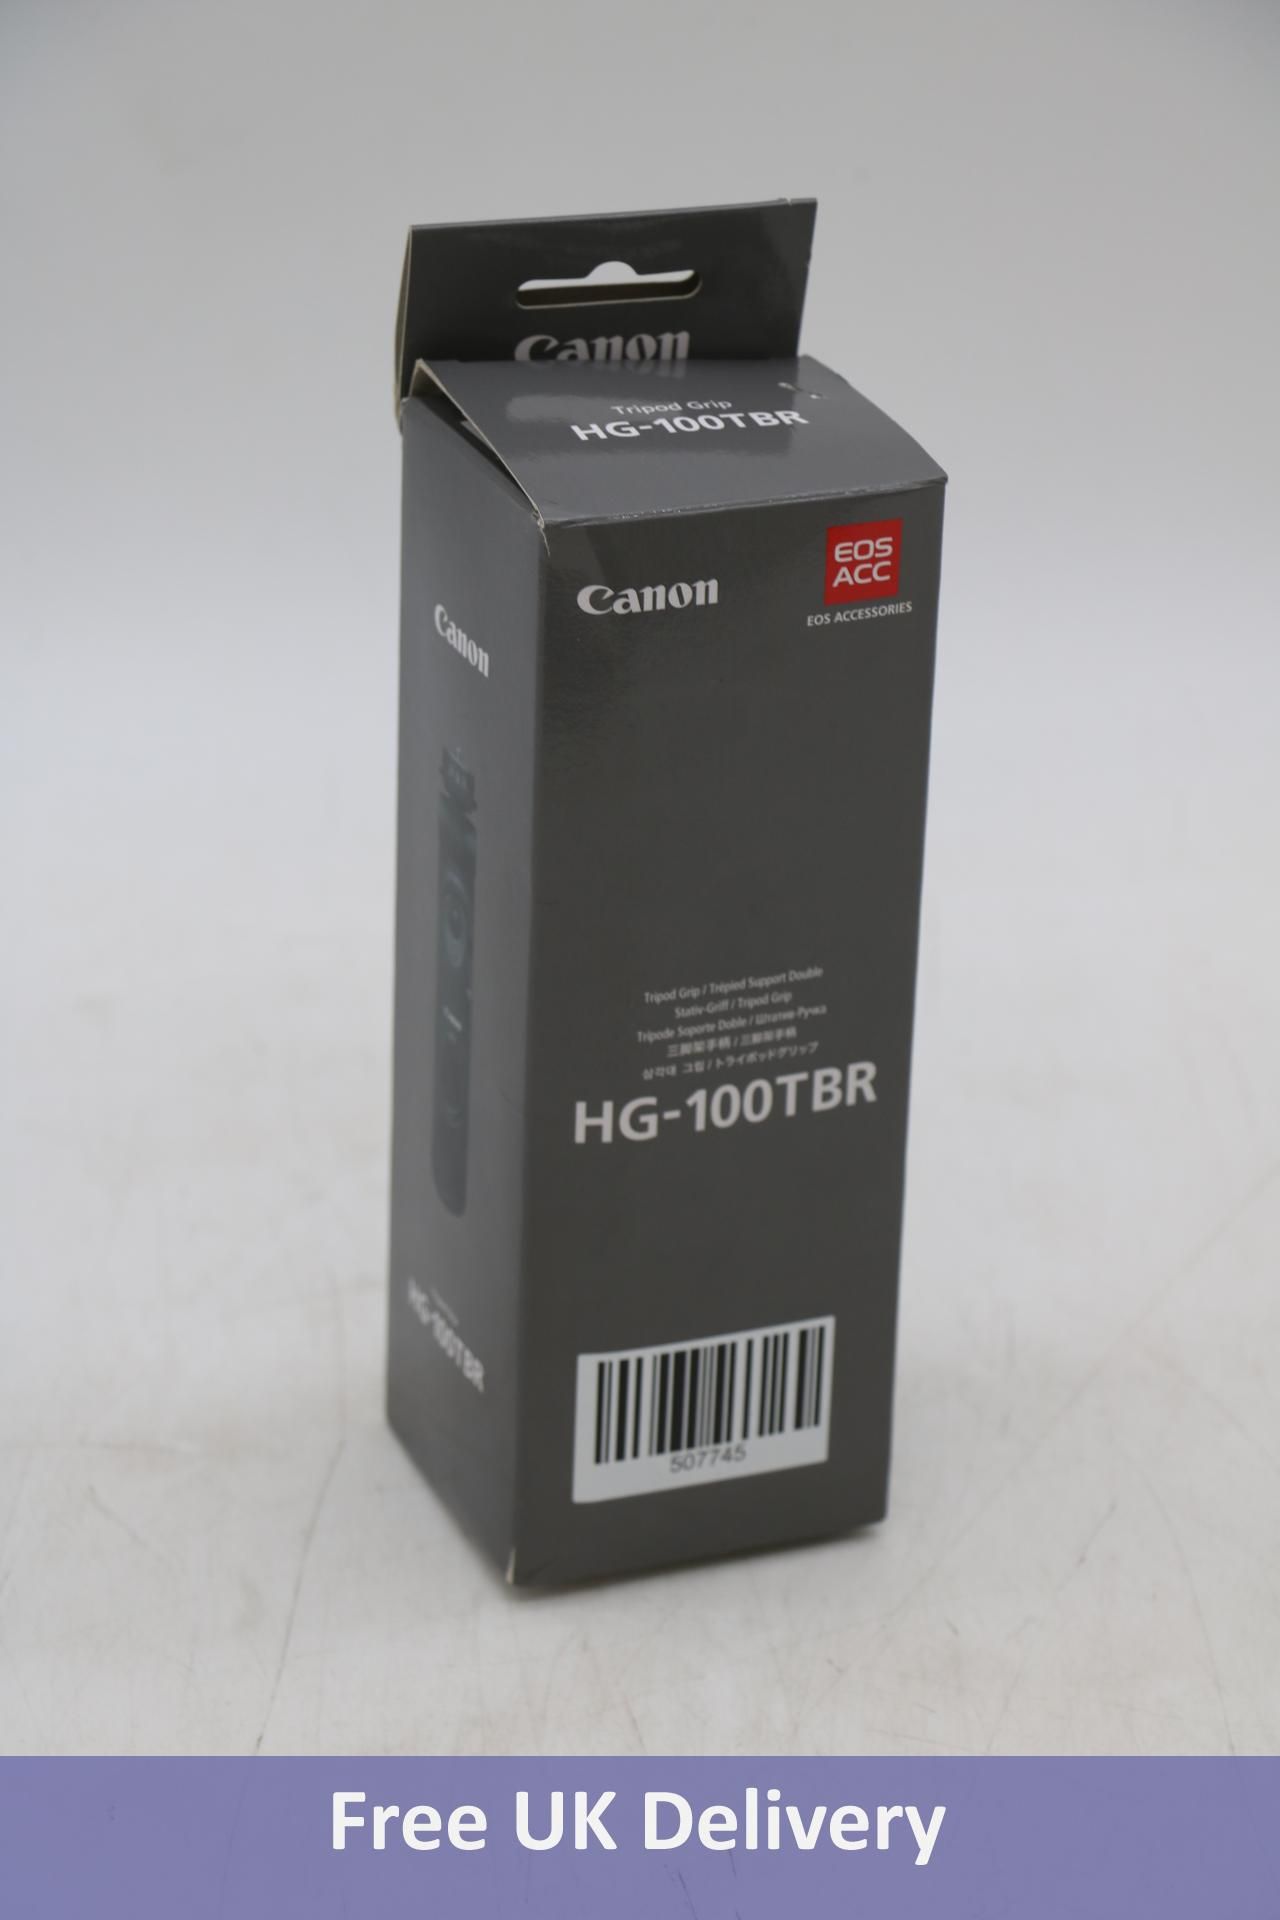 Canon Tripod Grip HG-100TBR. Used. Box damaged, missing wireless remote controller BR-E1